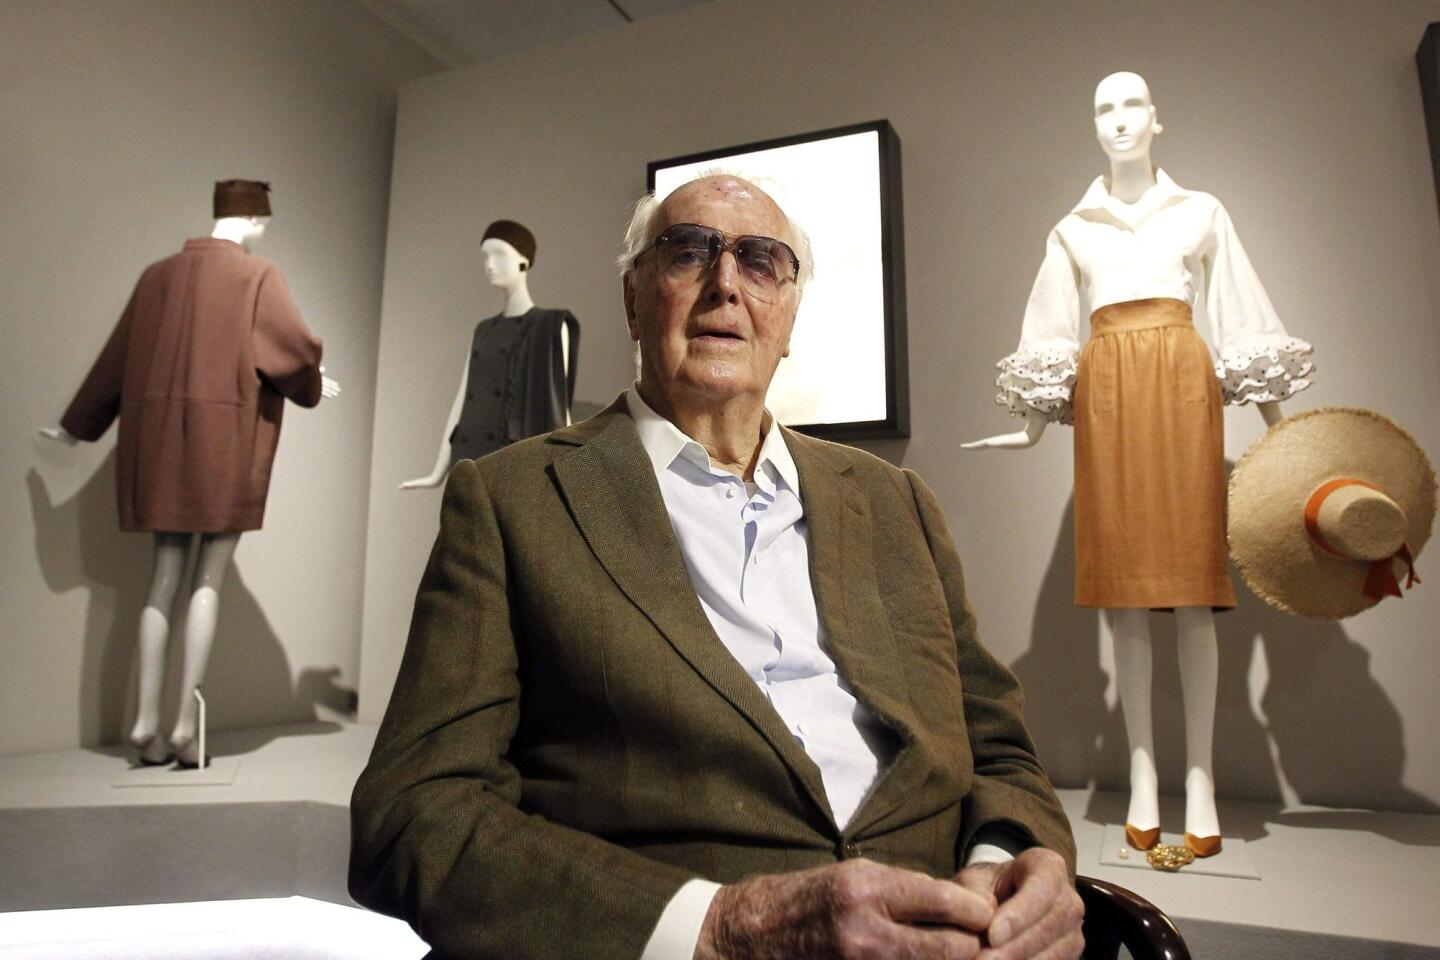 Hubert de Givenchy, iconic designer for Audrey Heburn, dies